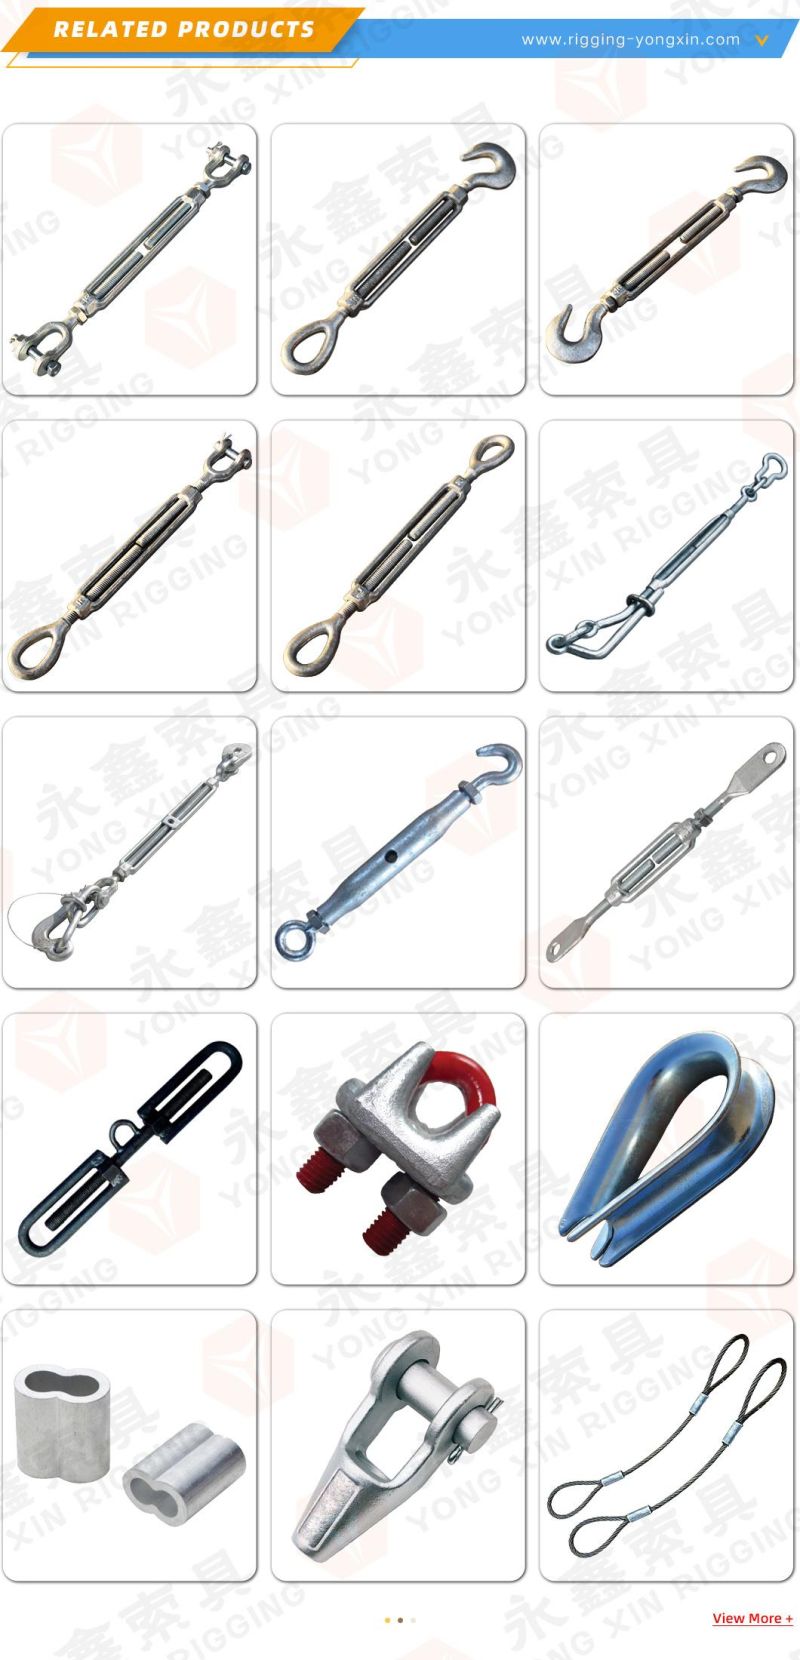 3/4" Zinc Plating/Galvanized Thimble U. S. Type G-414 Wire Rope Thimble China Supplier